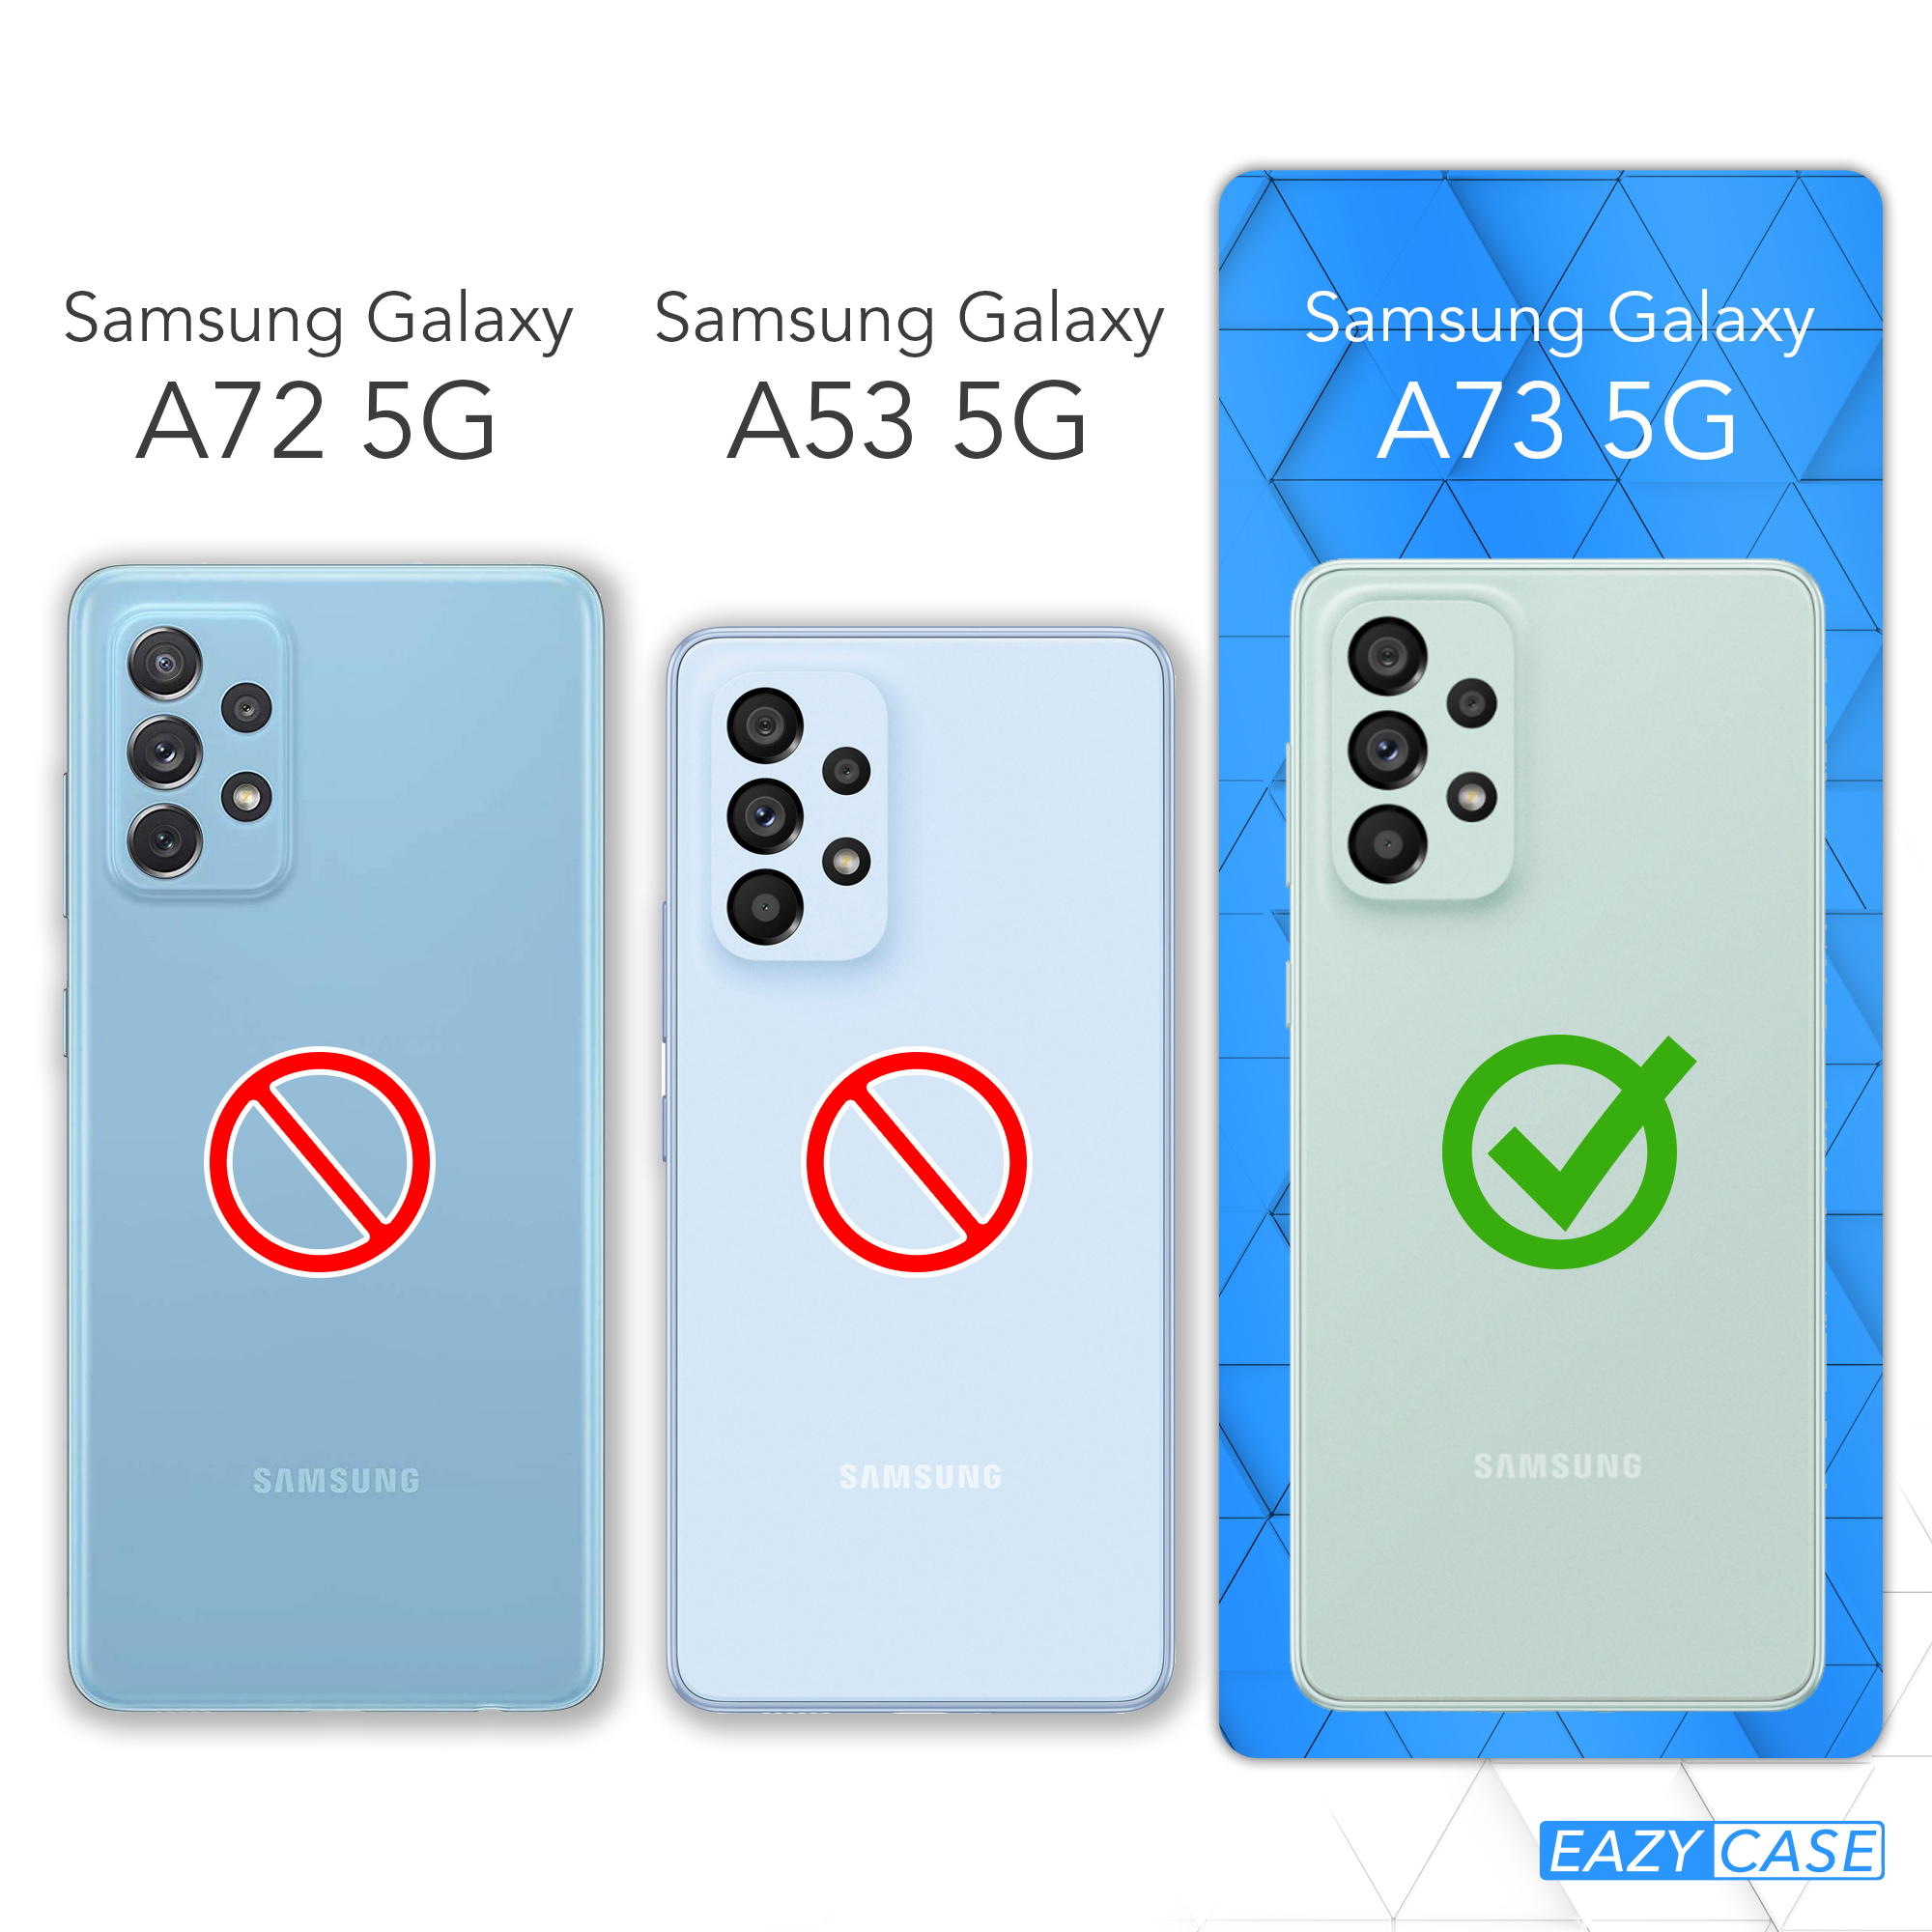 EAZY CASE Handycase Eis Samsung, Galaxy A73 Backcover, Blau 5G, Silikon TPU Matt